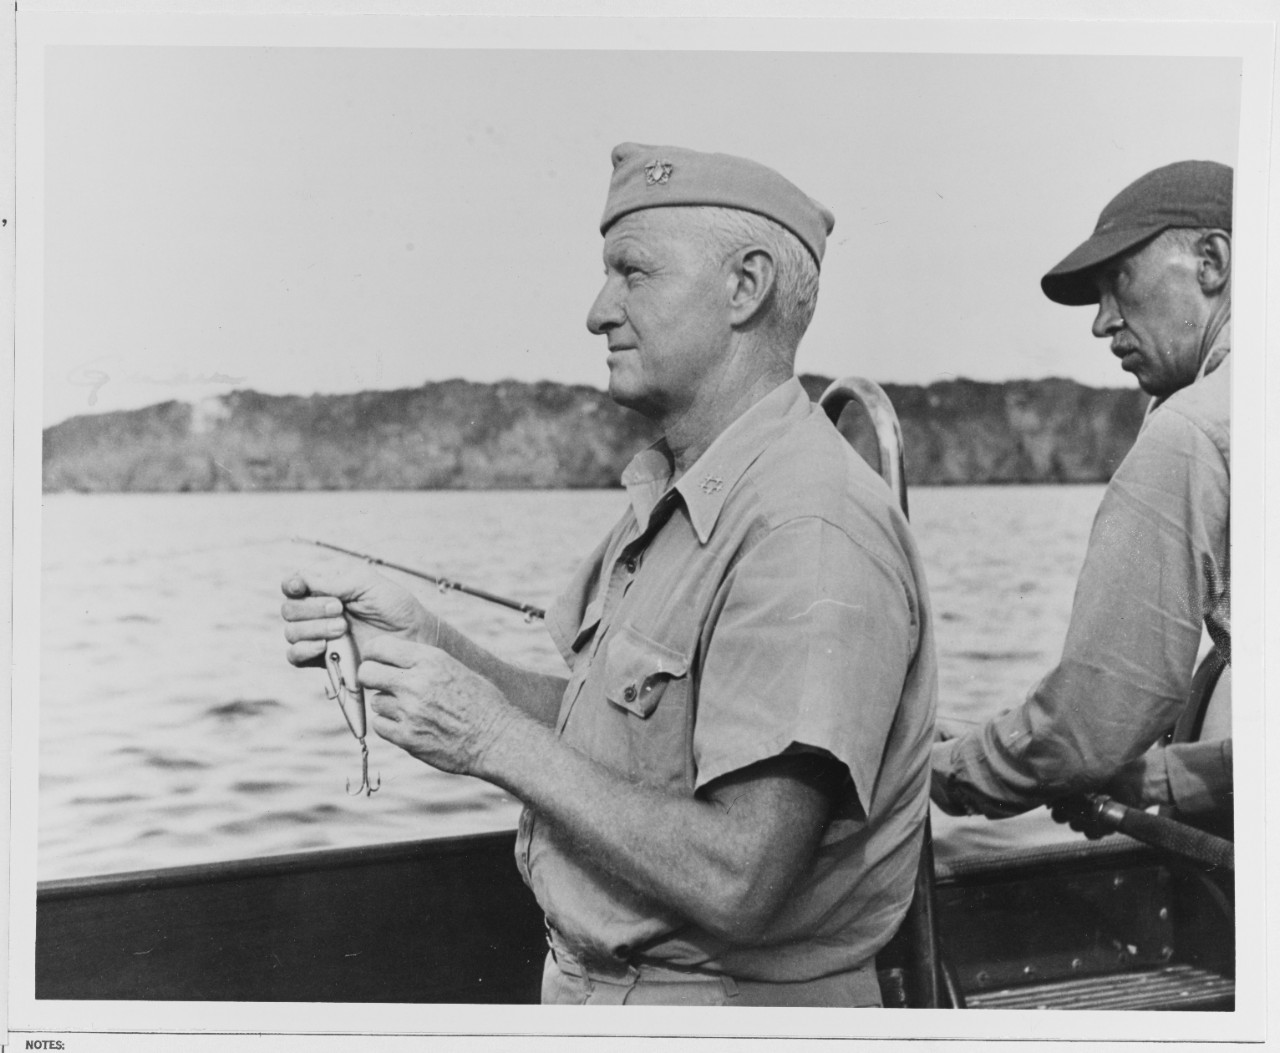 Fleet Admiral C.W. Nimitz and Robert E. Sherwood